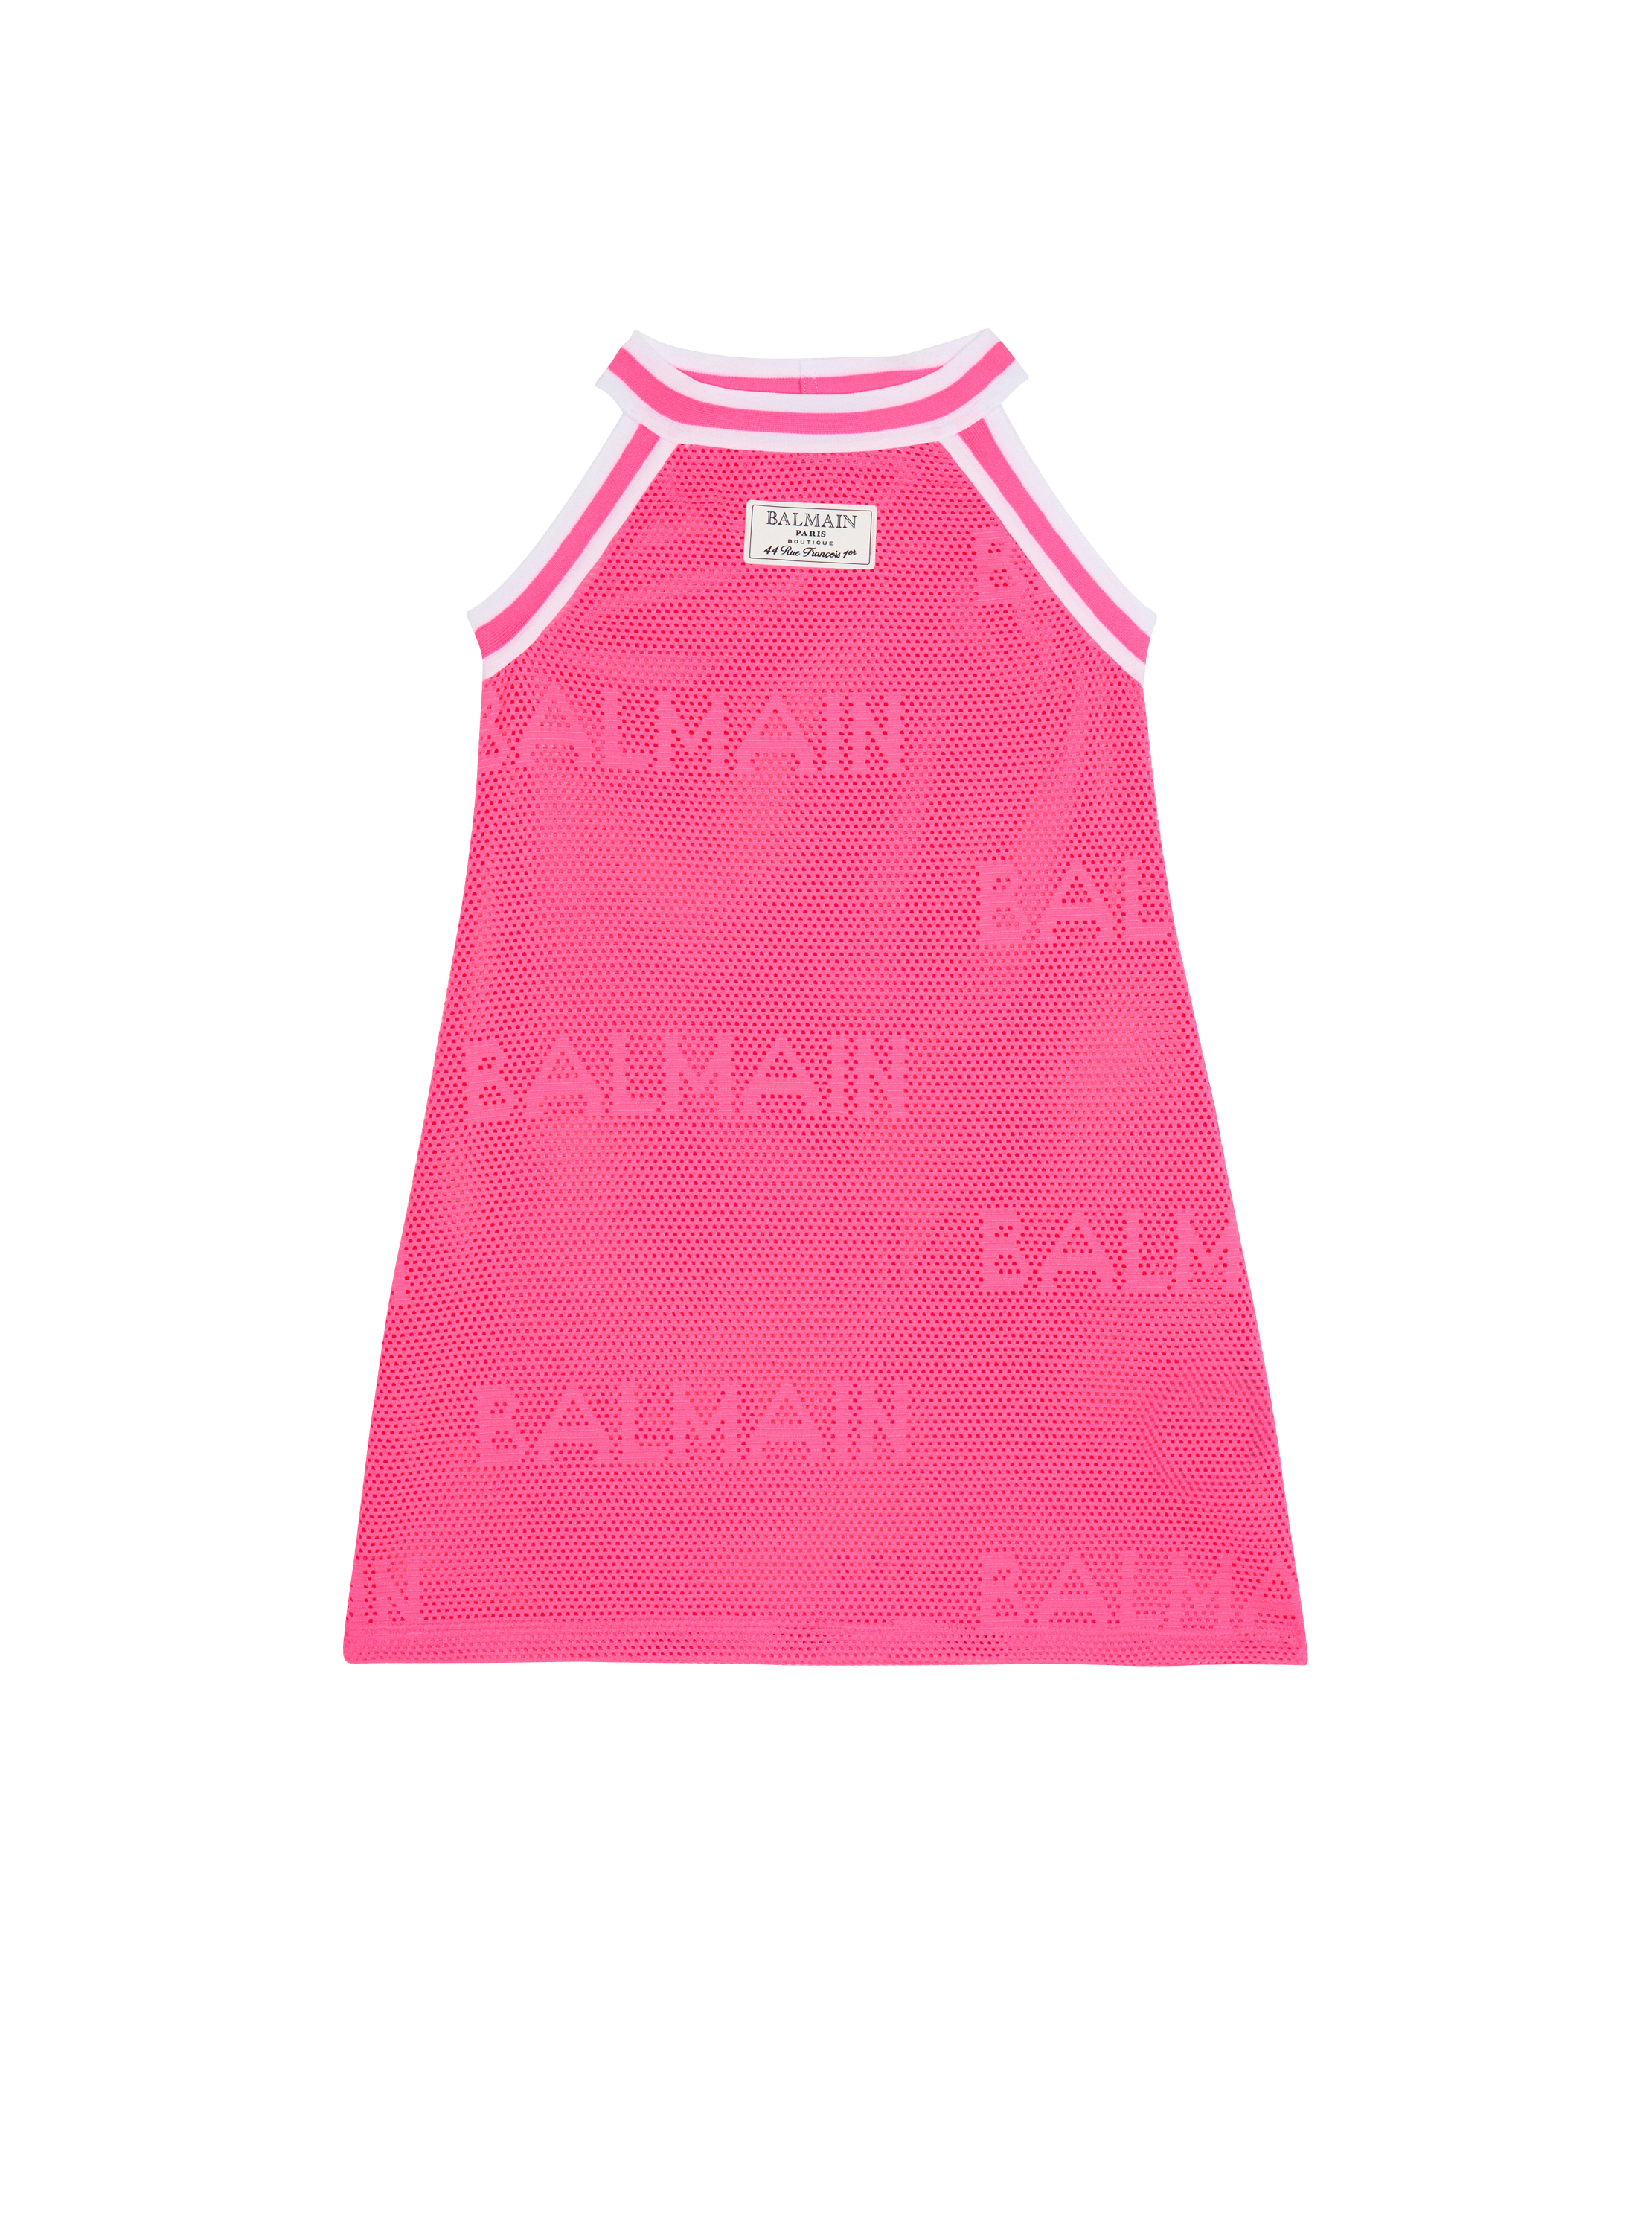 Knit dress with Balmain logo 